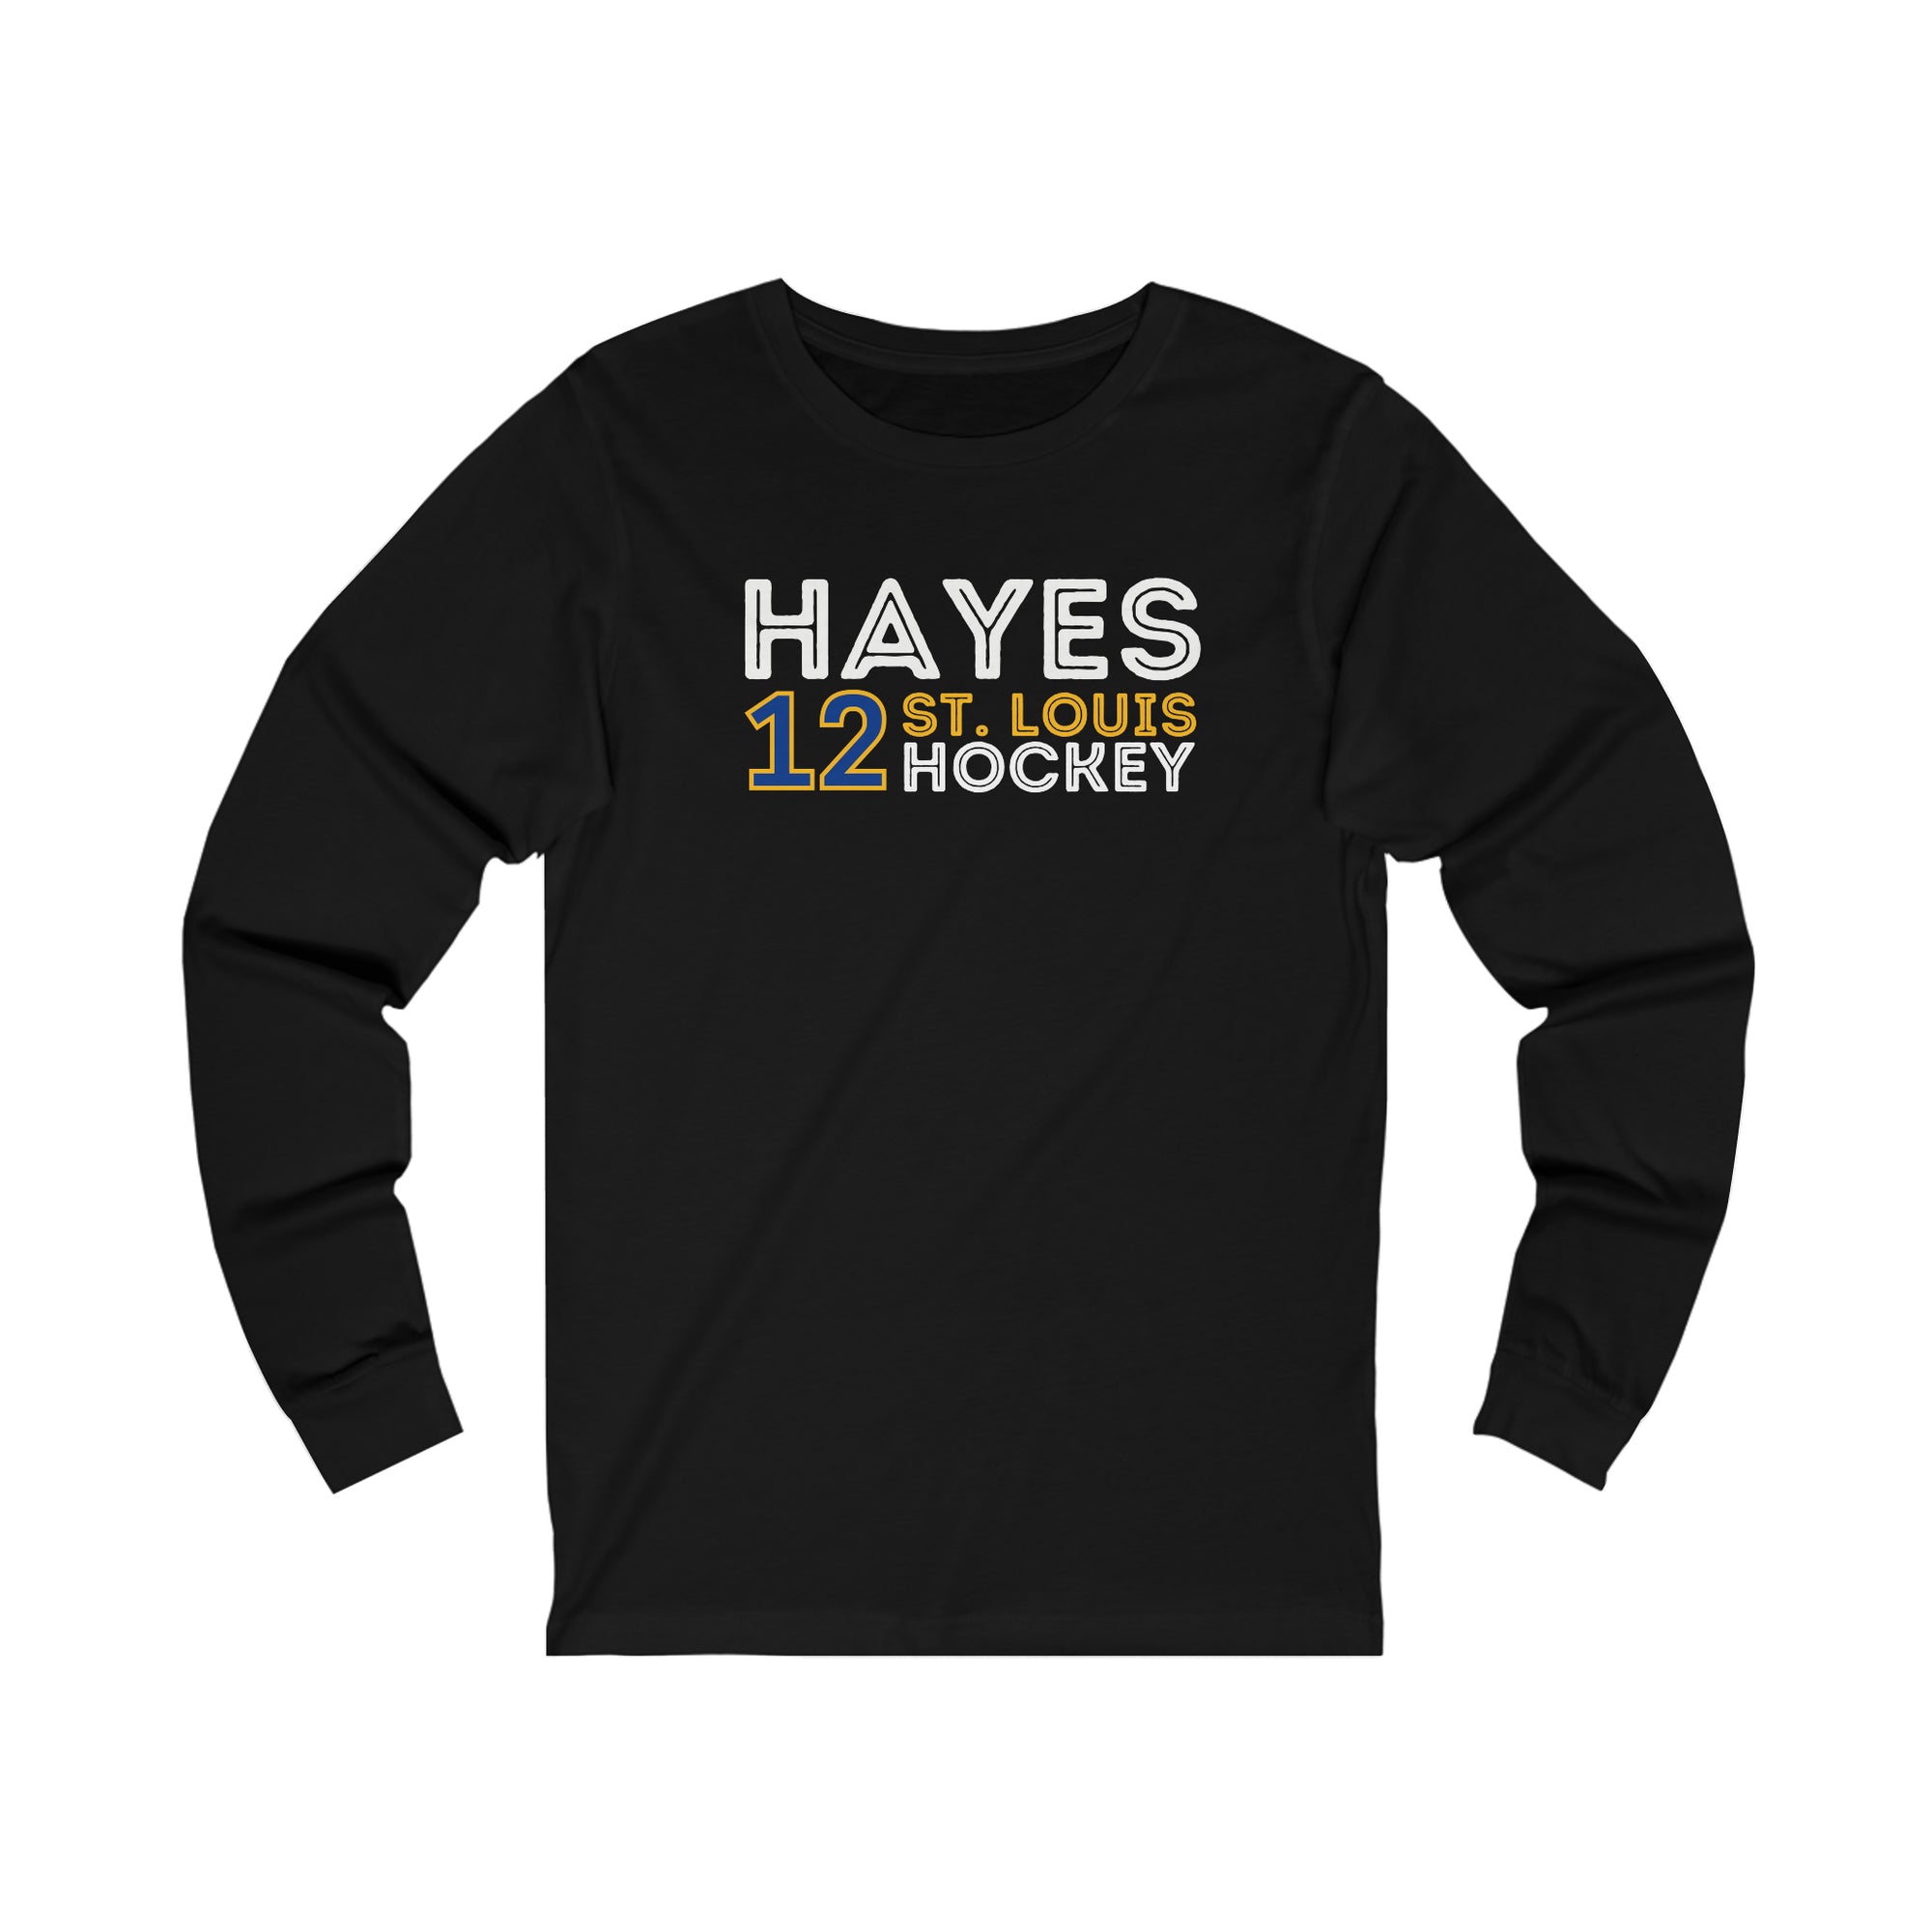 Hayes 12 St. Louis Hockey Grafitti Wall Design Unisex Jersey Long Sleeve Shirt